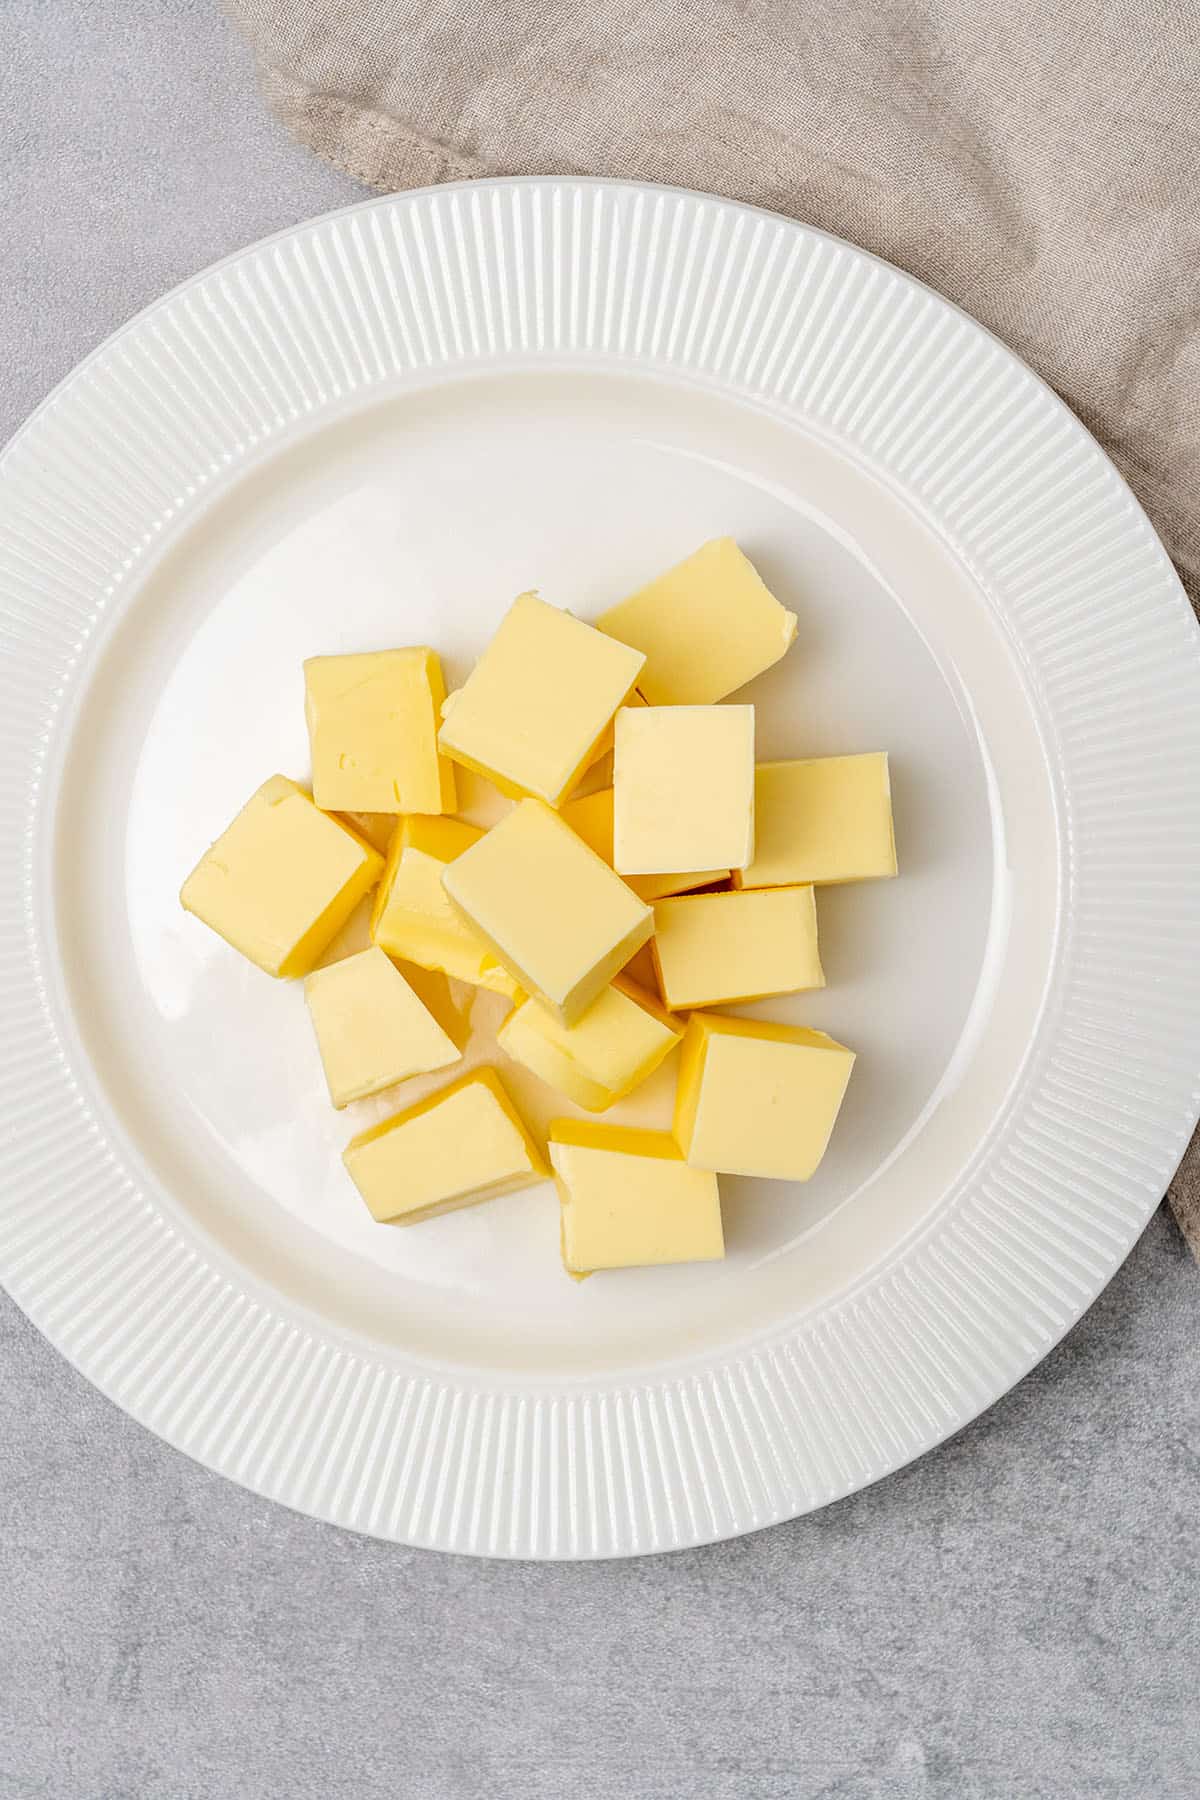 Butter cubes on a plate.